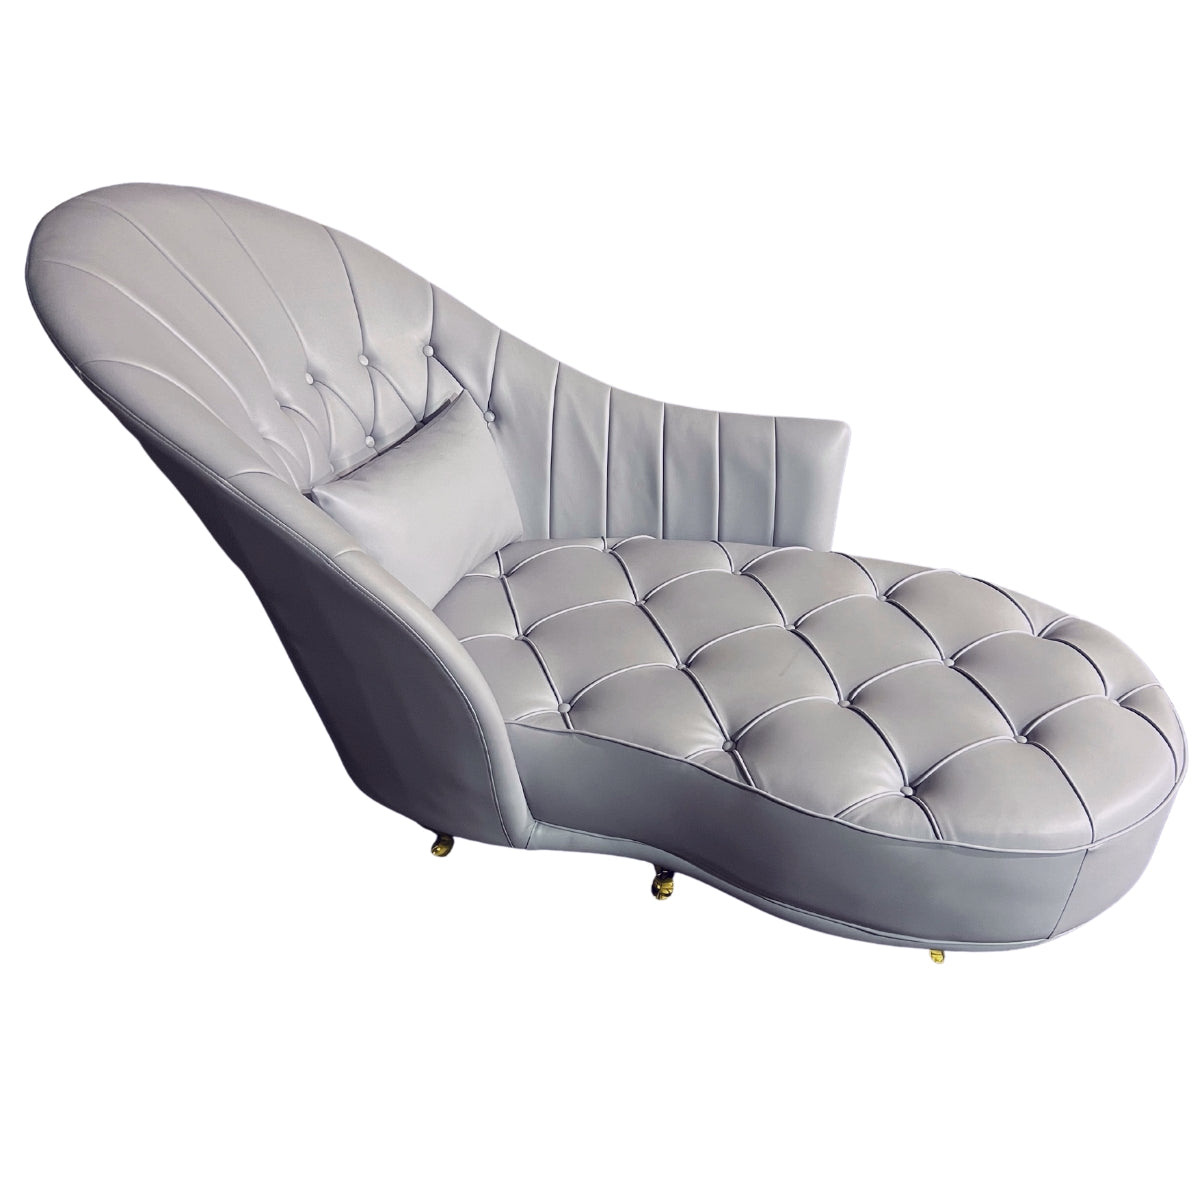 Luxury-chaise-grey-leather-elegant-interior-australia-1